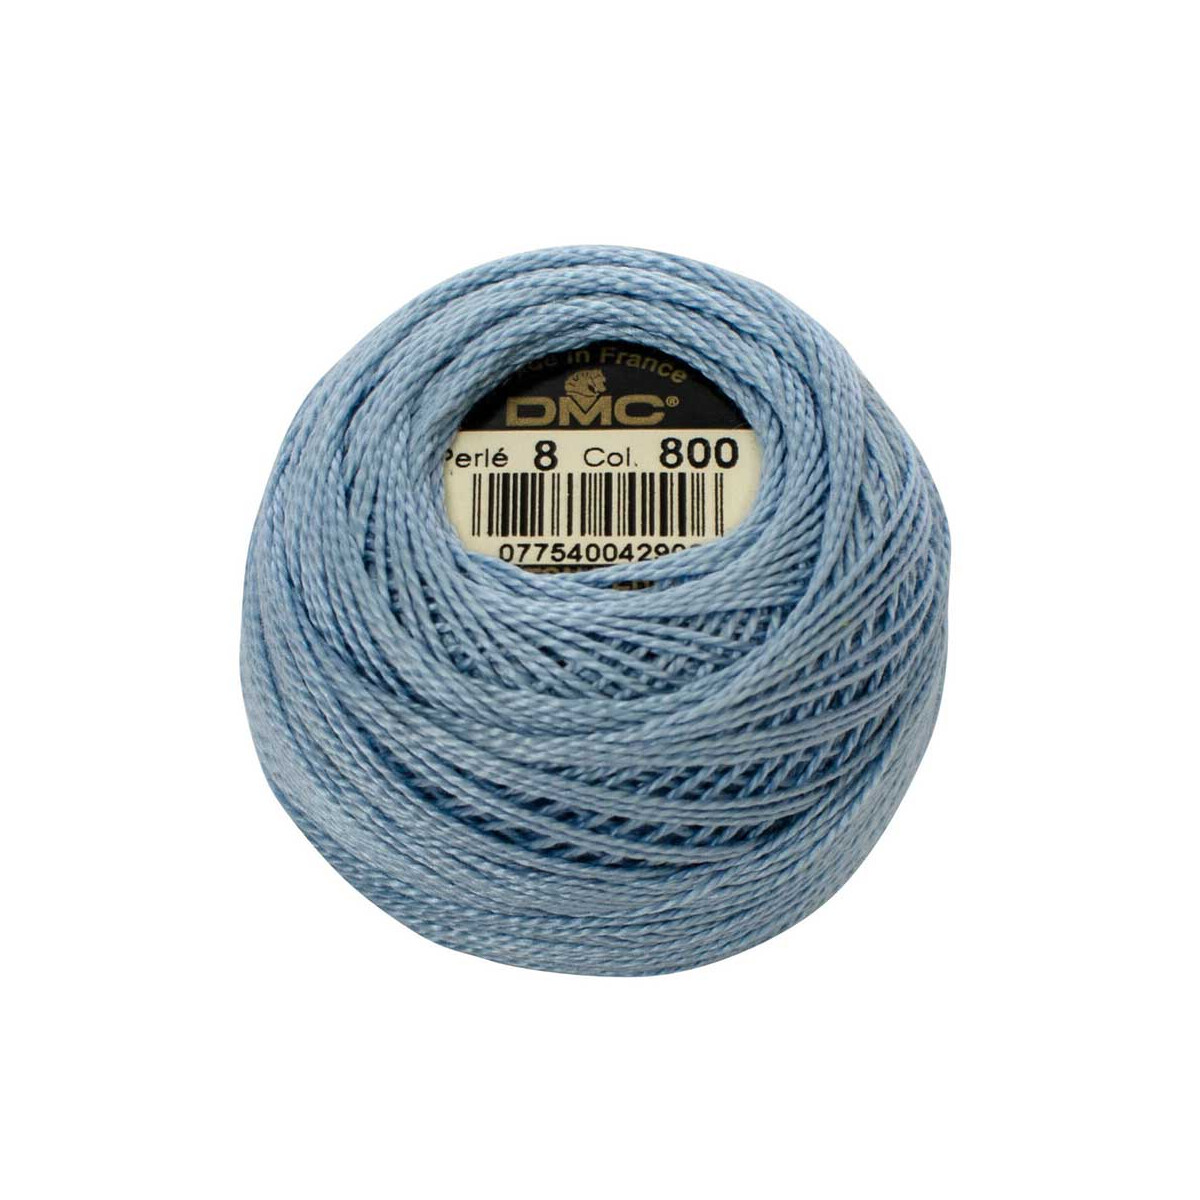 DMC Pearl Cotton on a ball Size 8, 10g, 116A/8-800